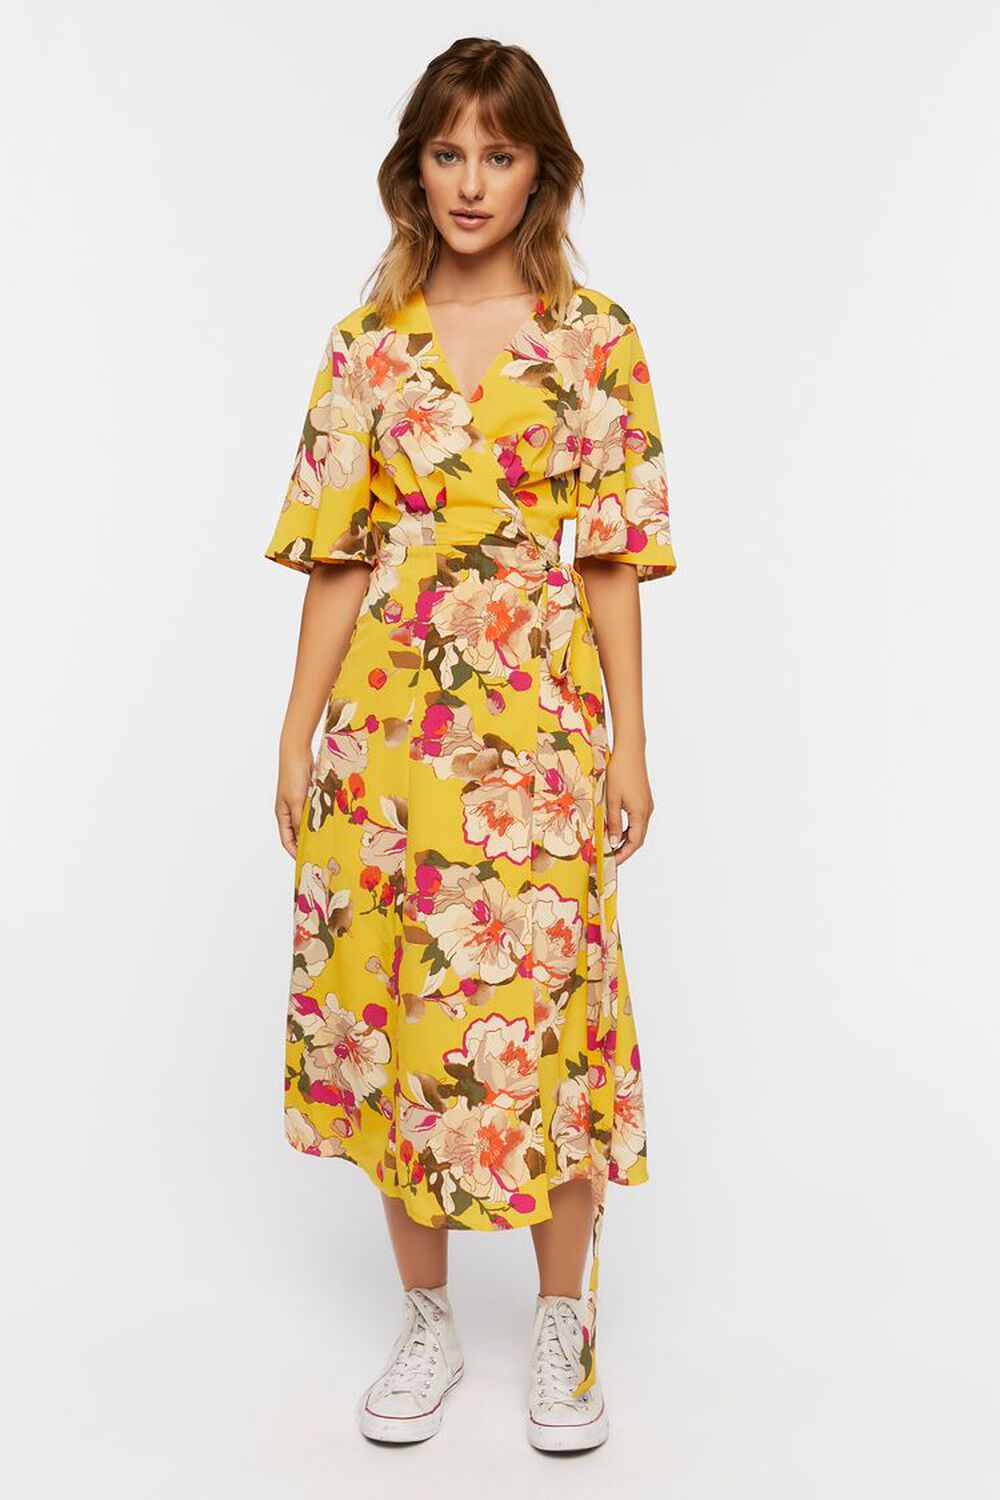 YELLOW/MULTI Floral Midi Wrap Dress, image 1